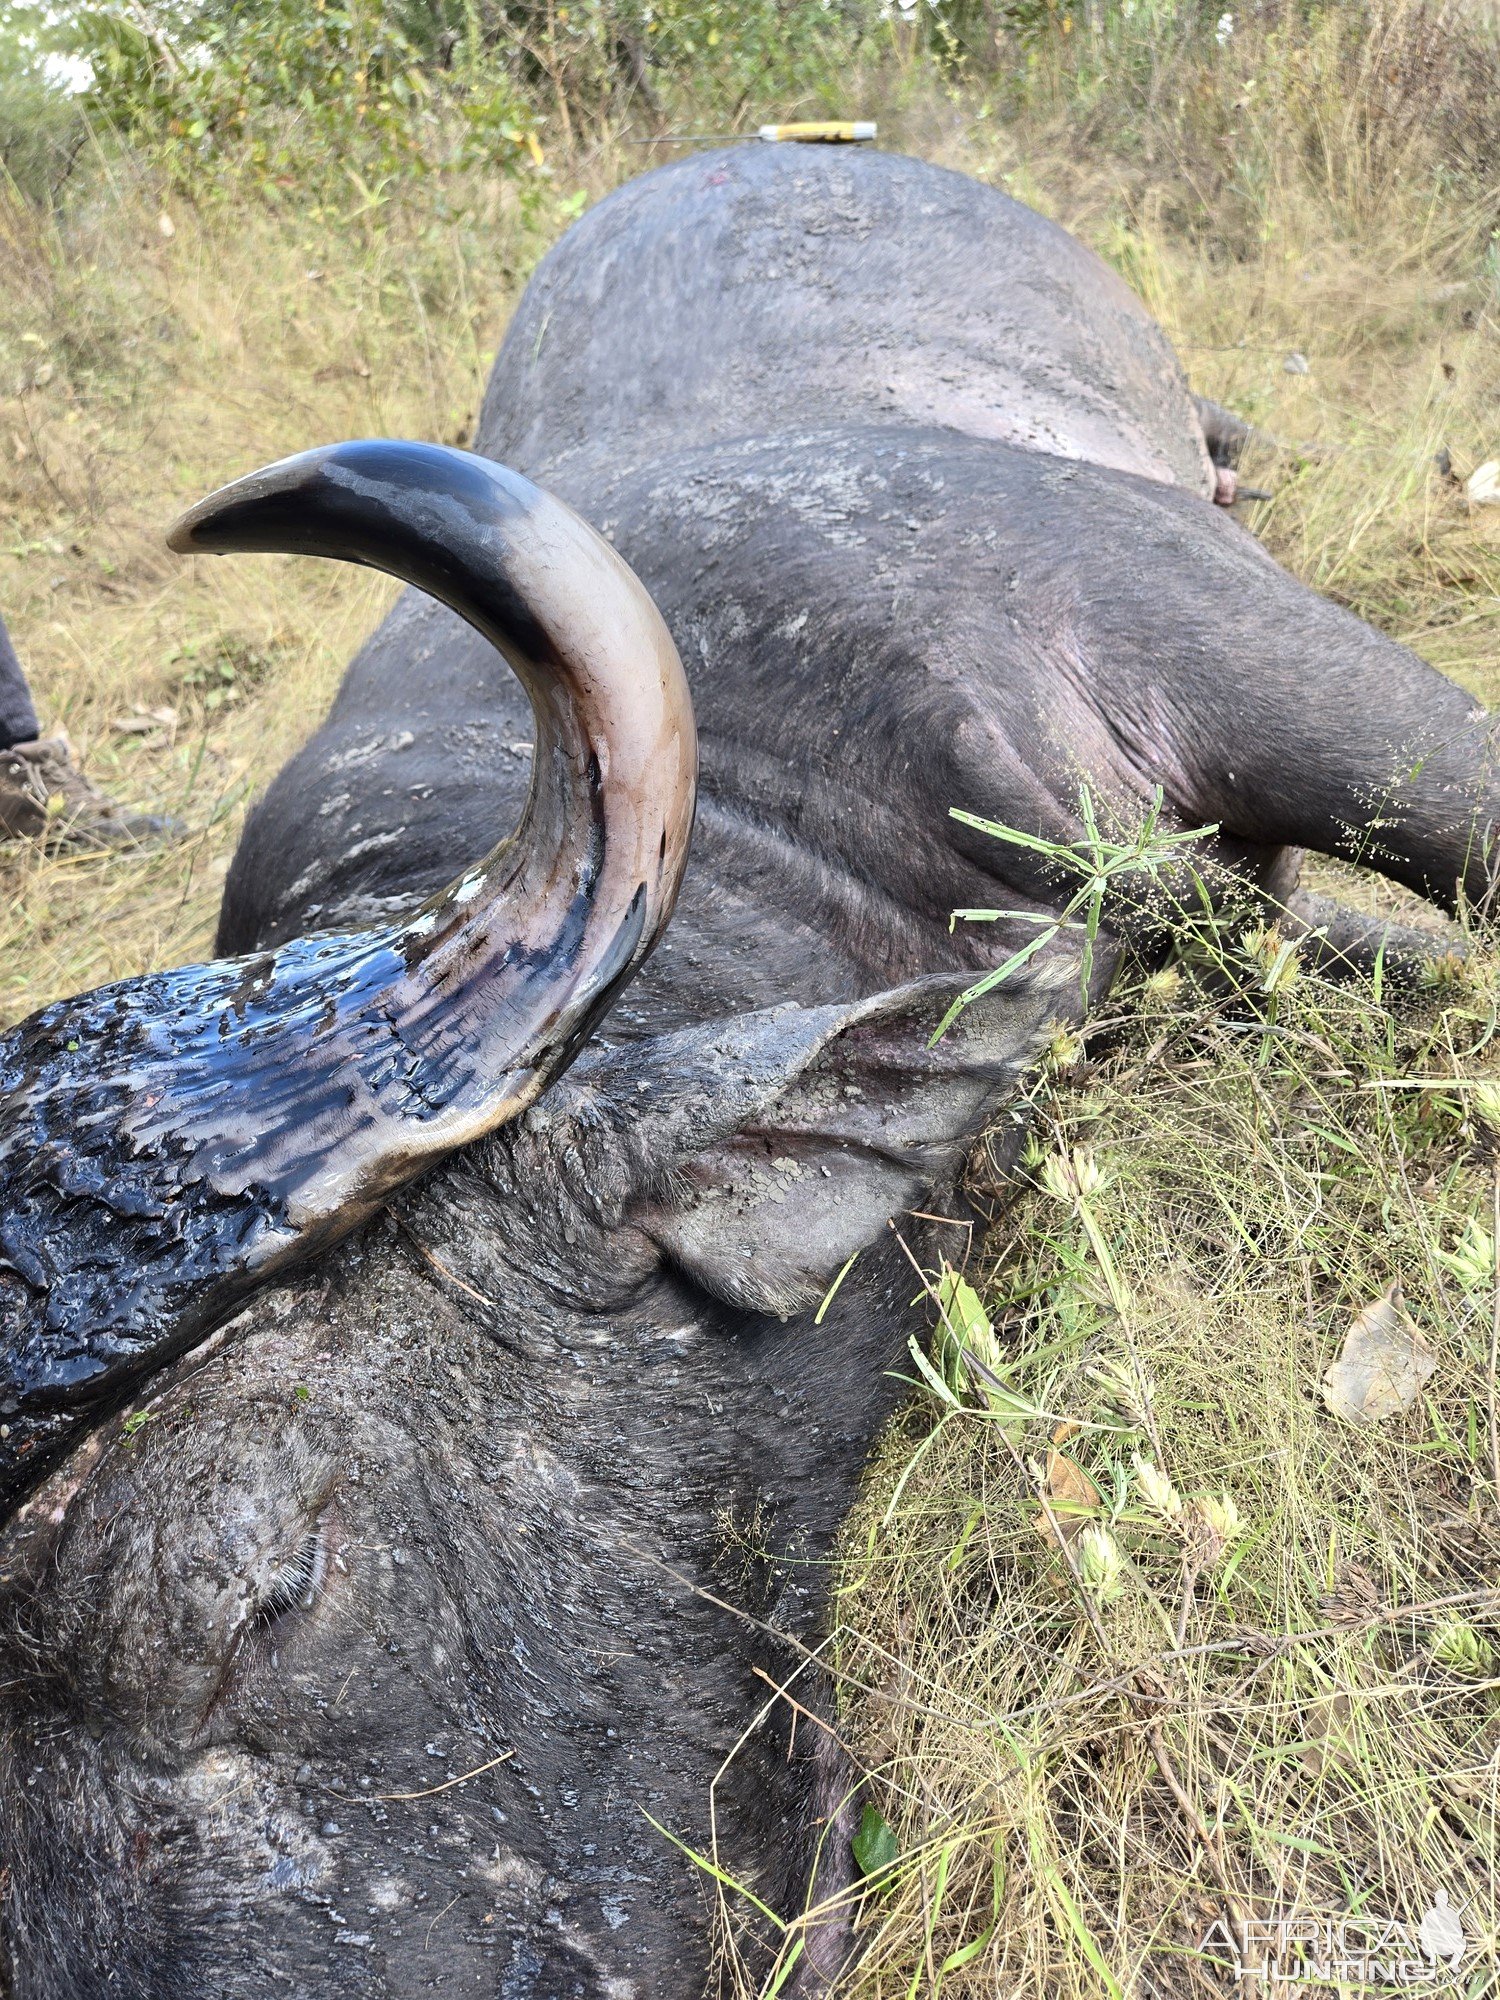 Buffalo Hunting Tanzania